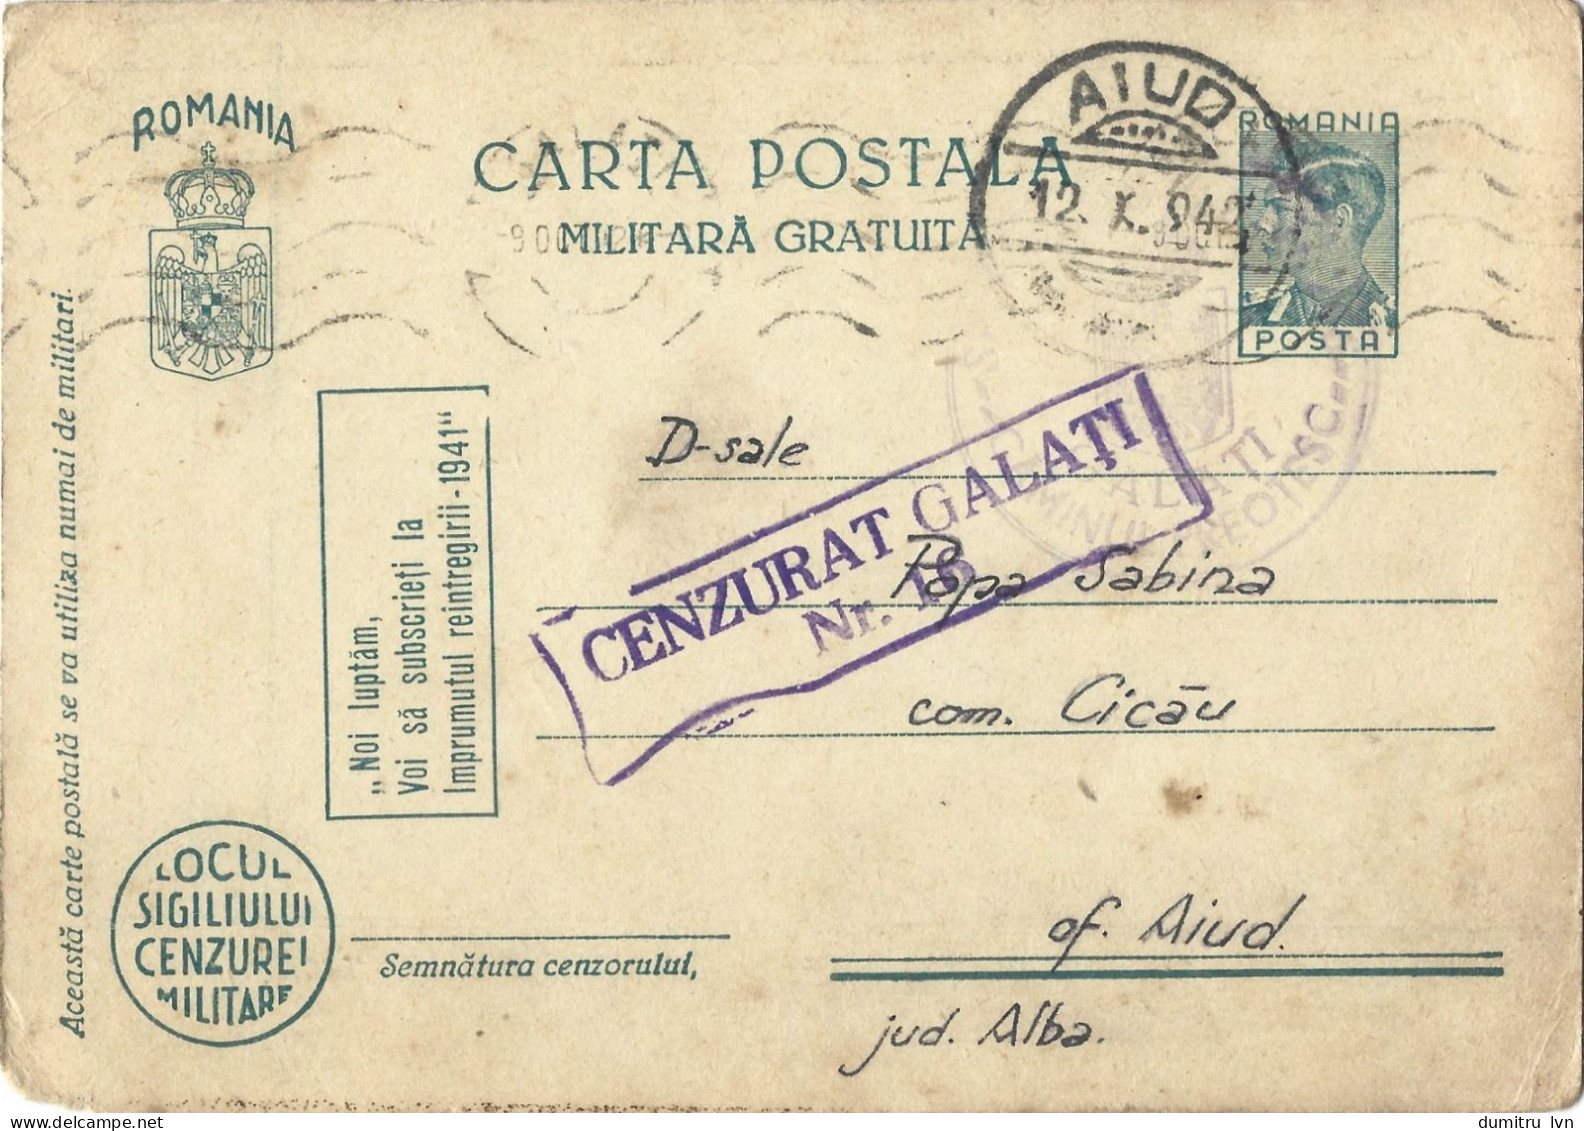 ROMANIA 1942 FREE MILITARY POSTCARD, CENSORED GALATI NR.16, GALATI CĂMINUL PREOȚESC STAMP, WOUNDED HOSPITAL Z. I. No 206 - 2. Weltkrieg (Briefe)